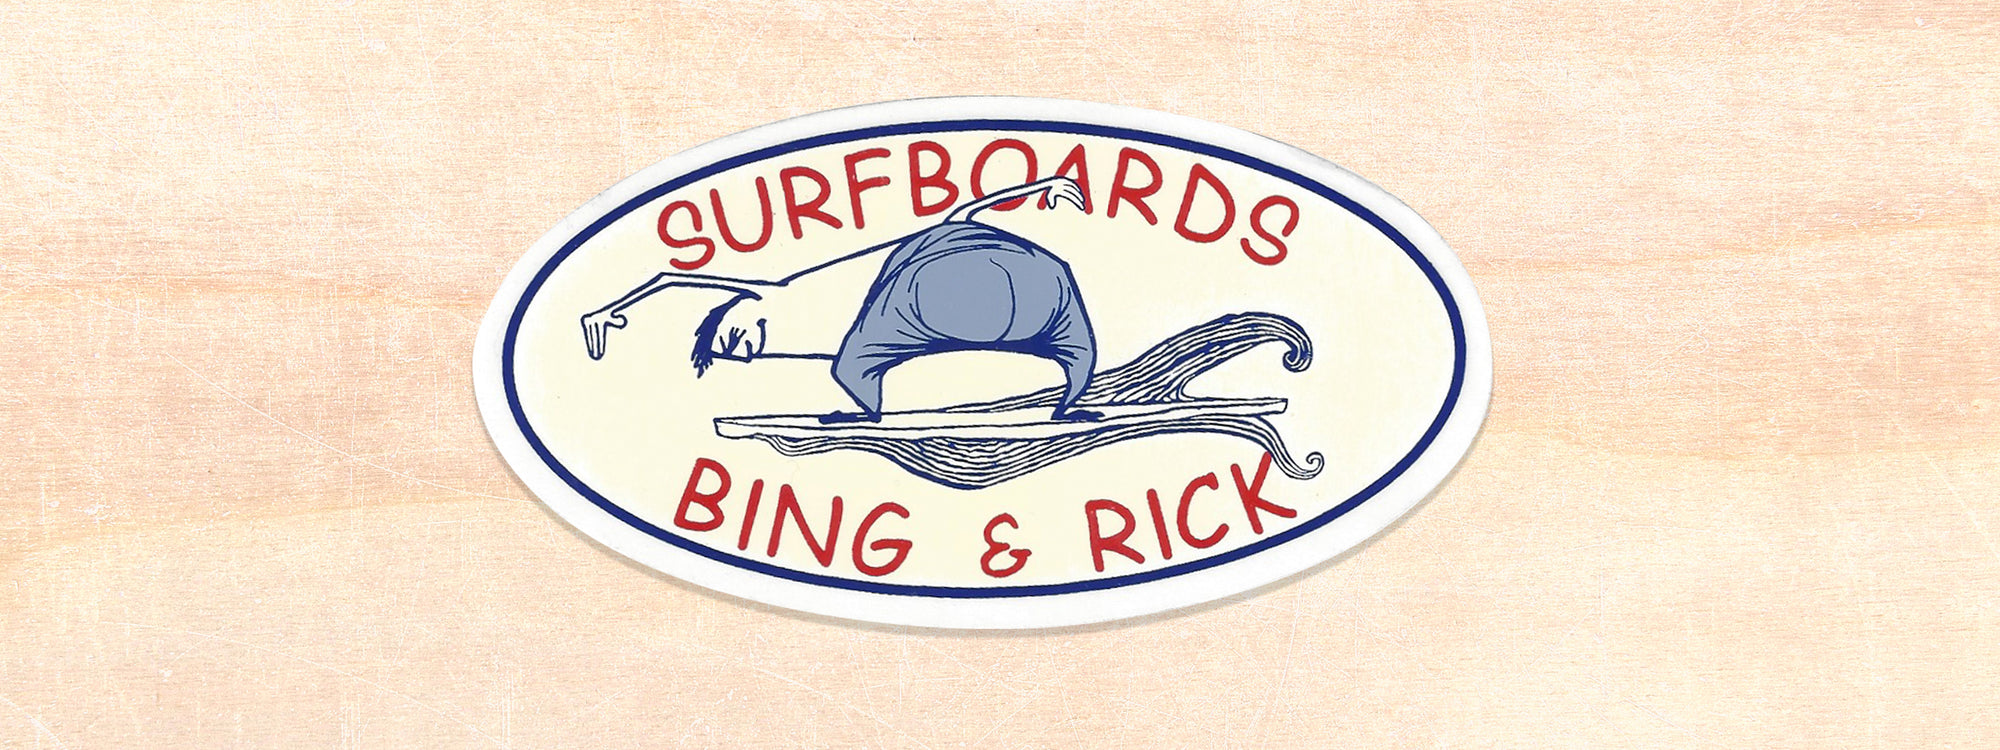 Bing and Rick Surfboards Logo Sticker